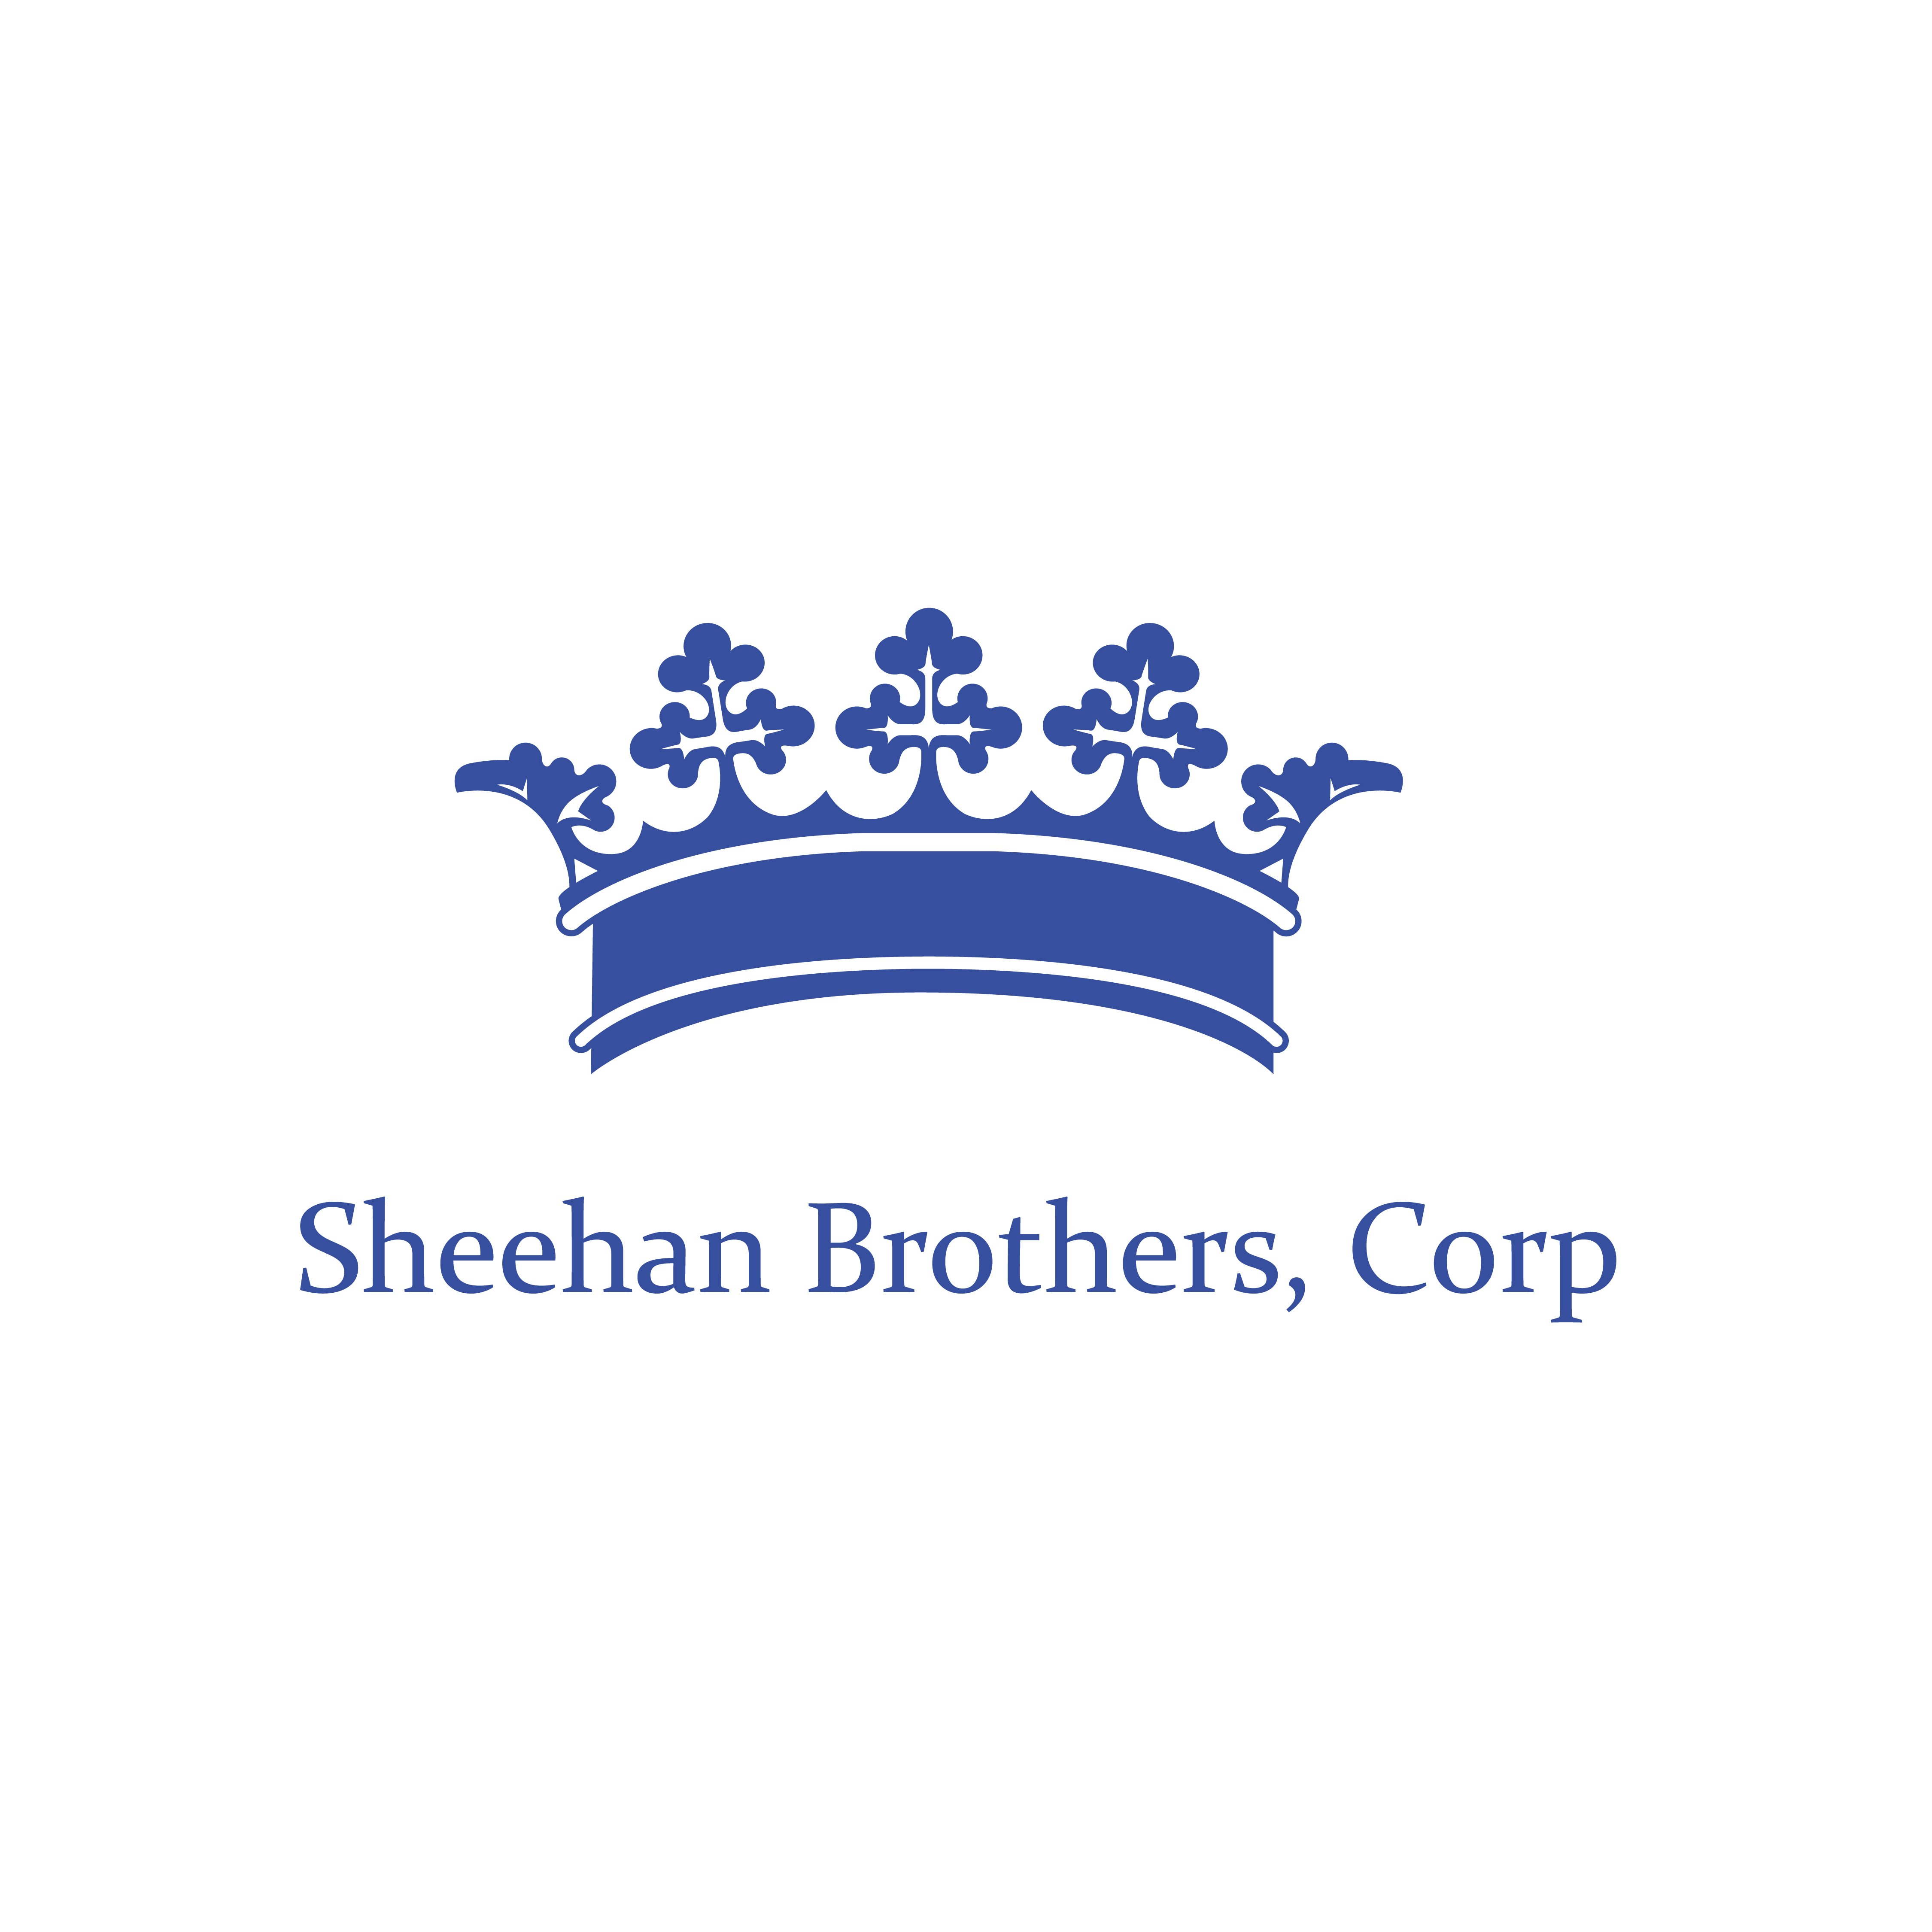 Sheehan Brothers Corp. - Wine Importer, Wholesaler & Distributor's Logo